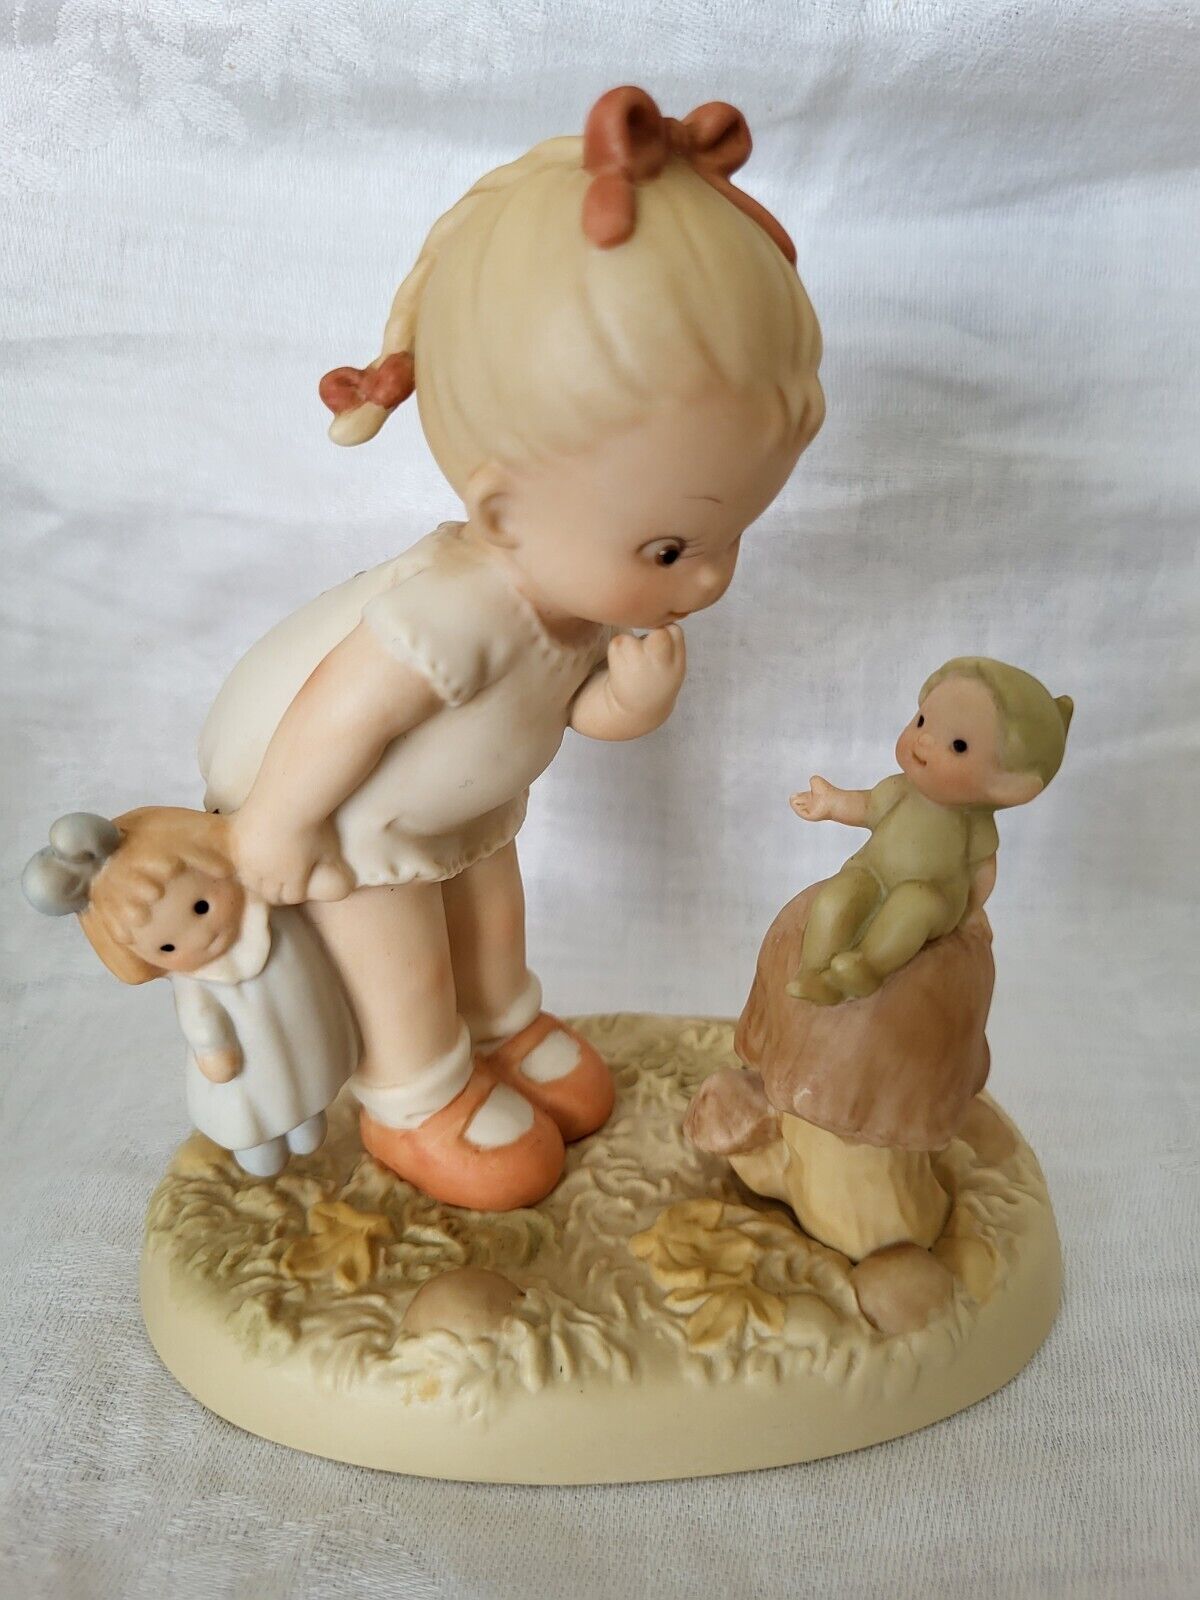 Lucie Atwell Good Morning Little Boo-boo figurine 1991 Enesco Memories